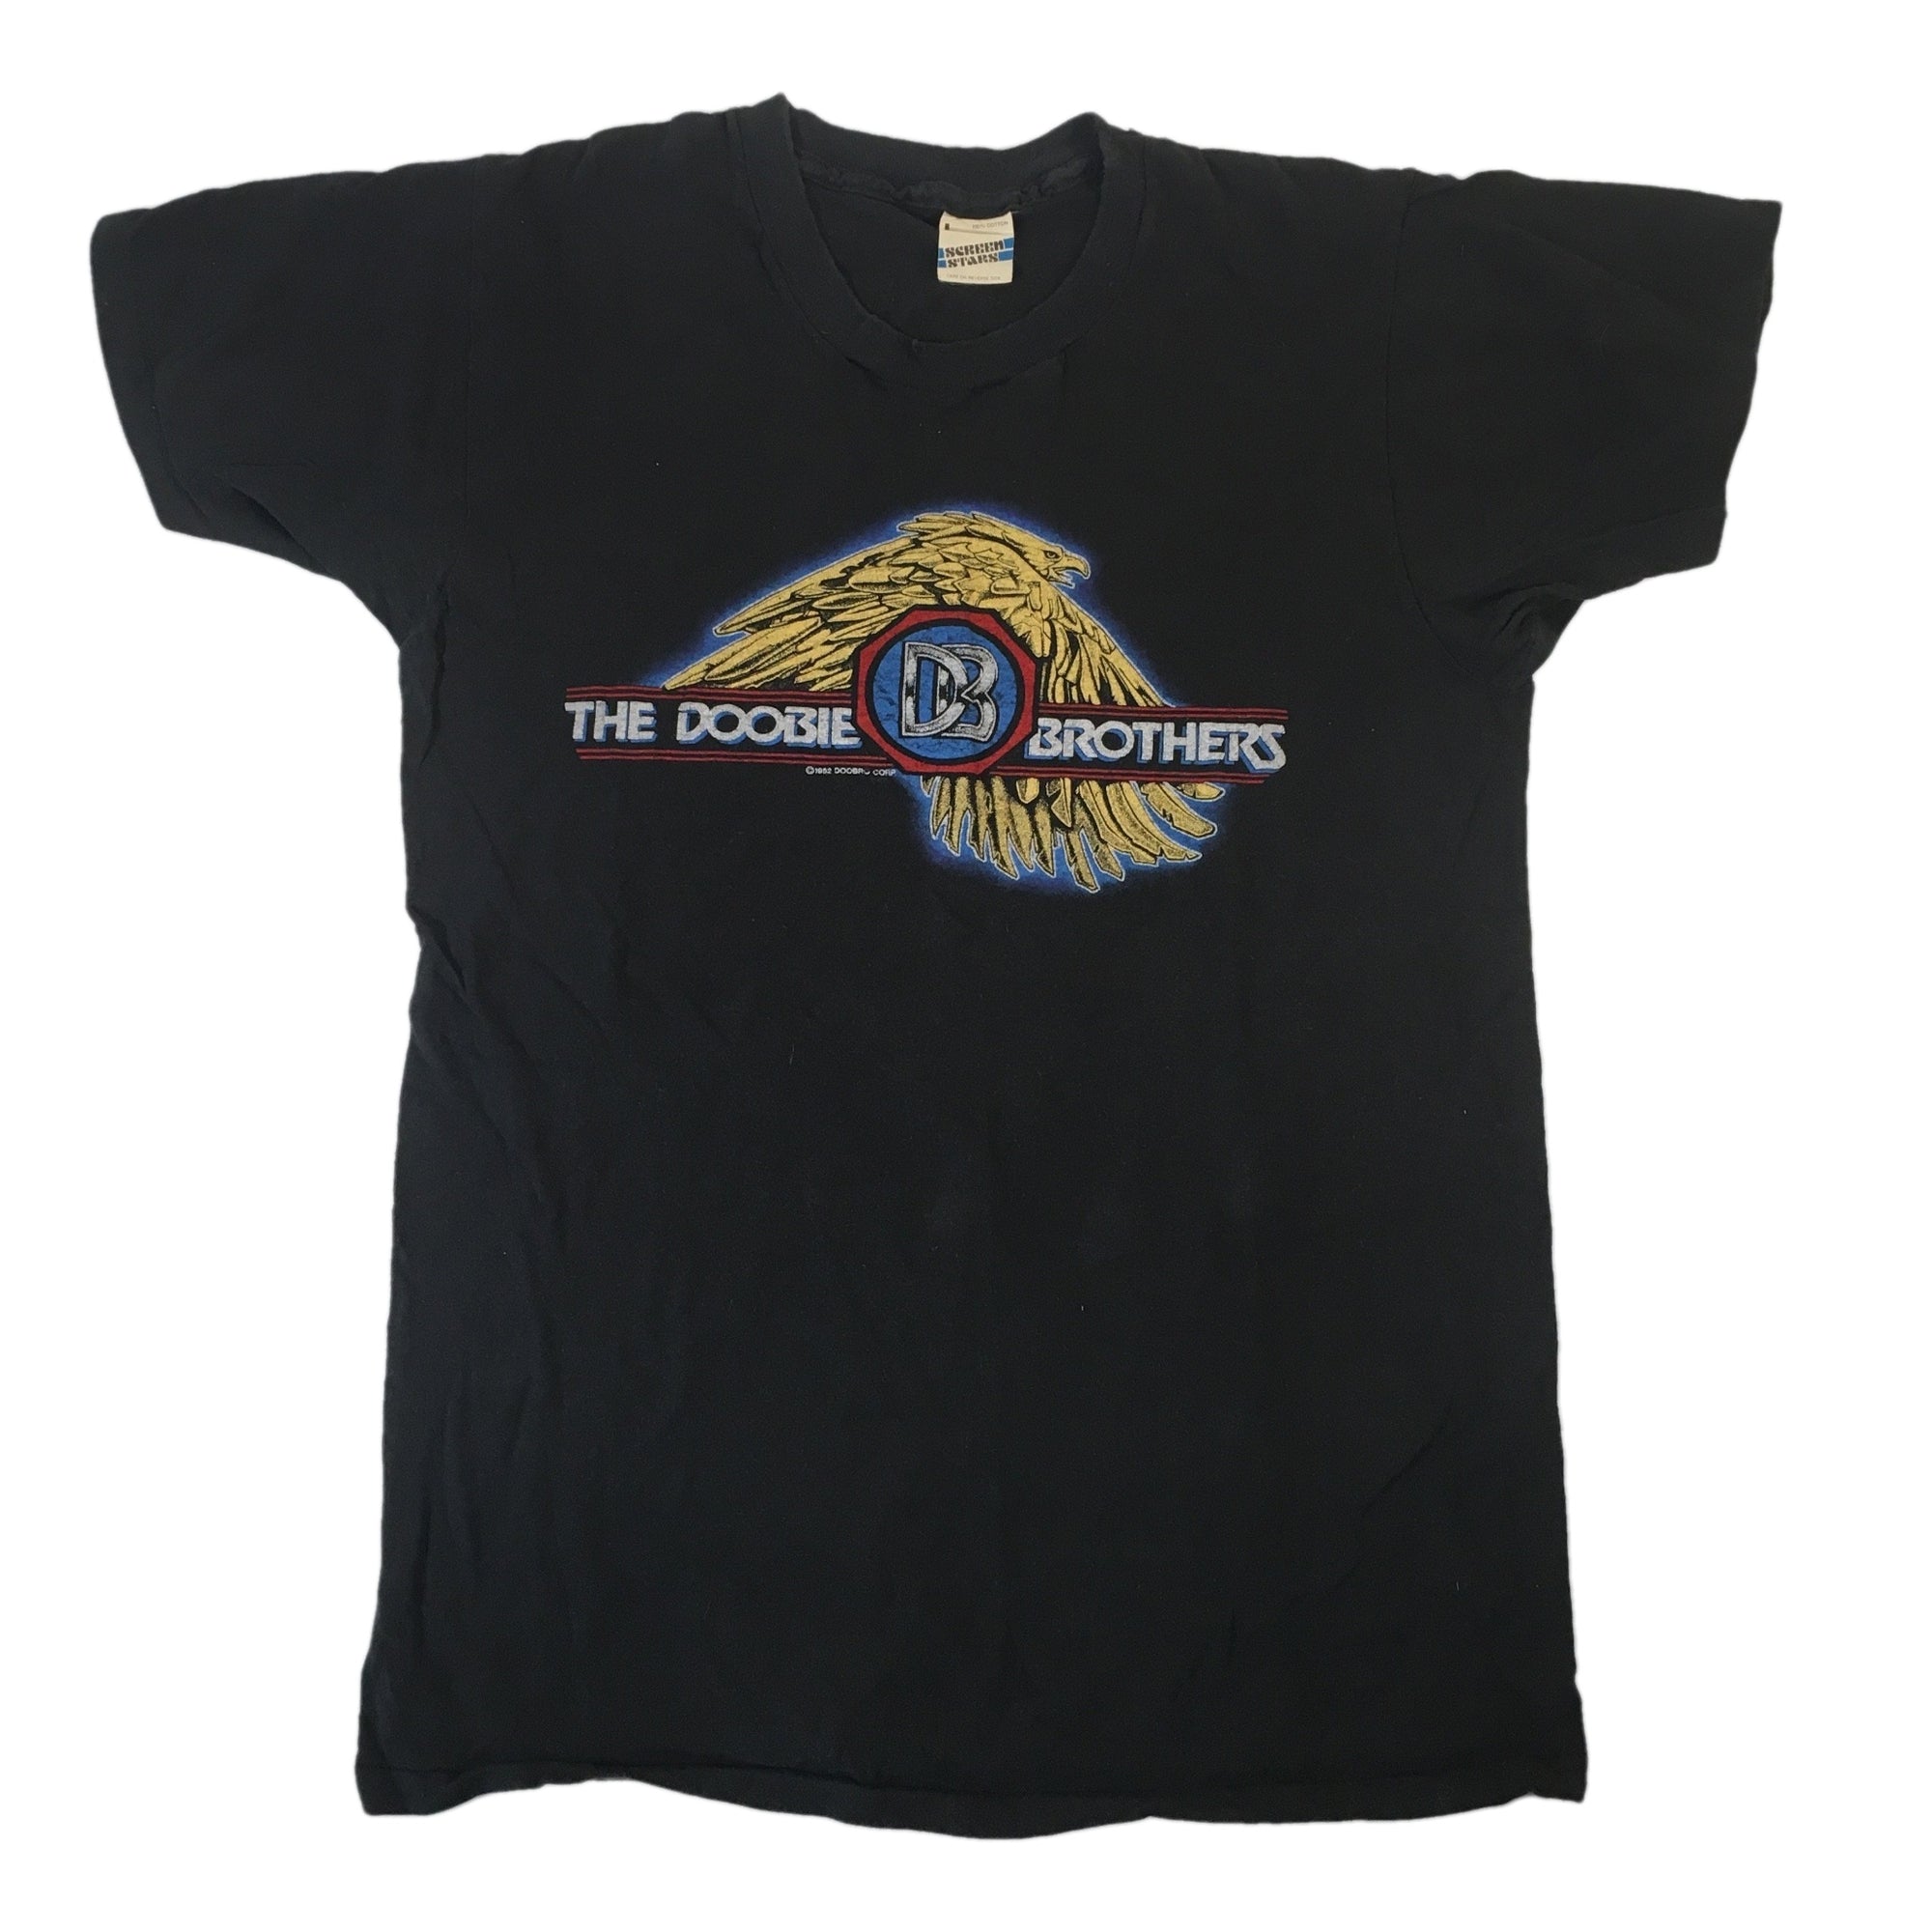 Vintage Doobie Brothers "Farewell Tour" T-Shirt - jointcustodydc